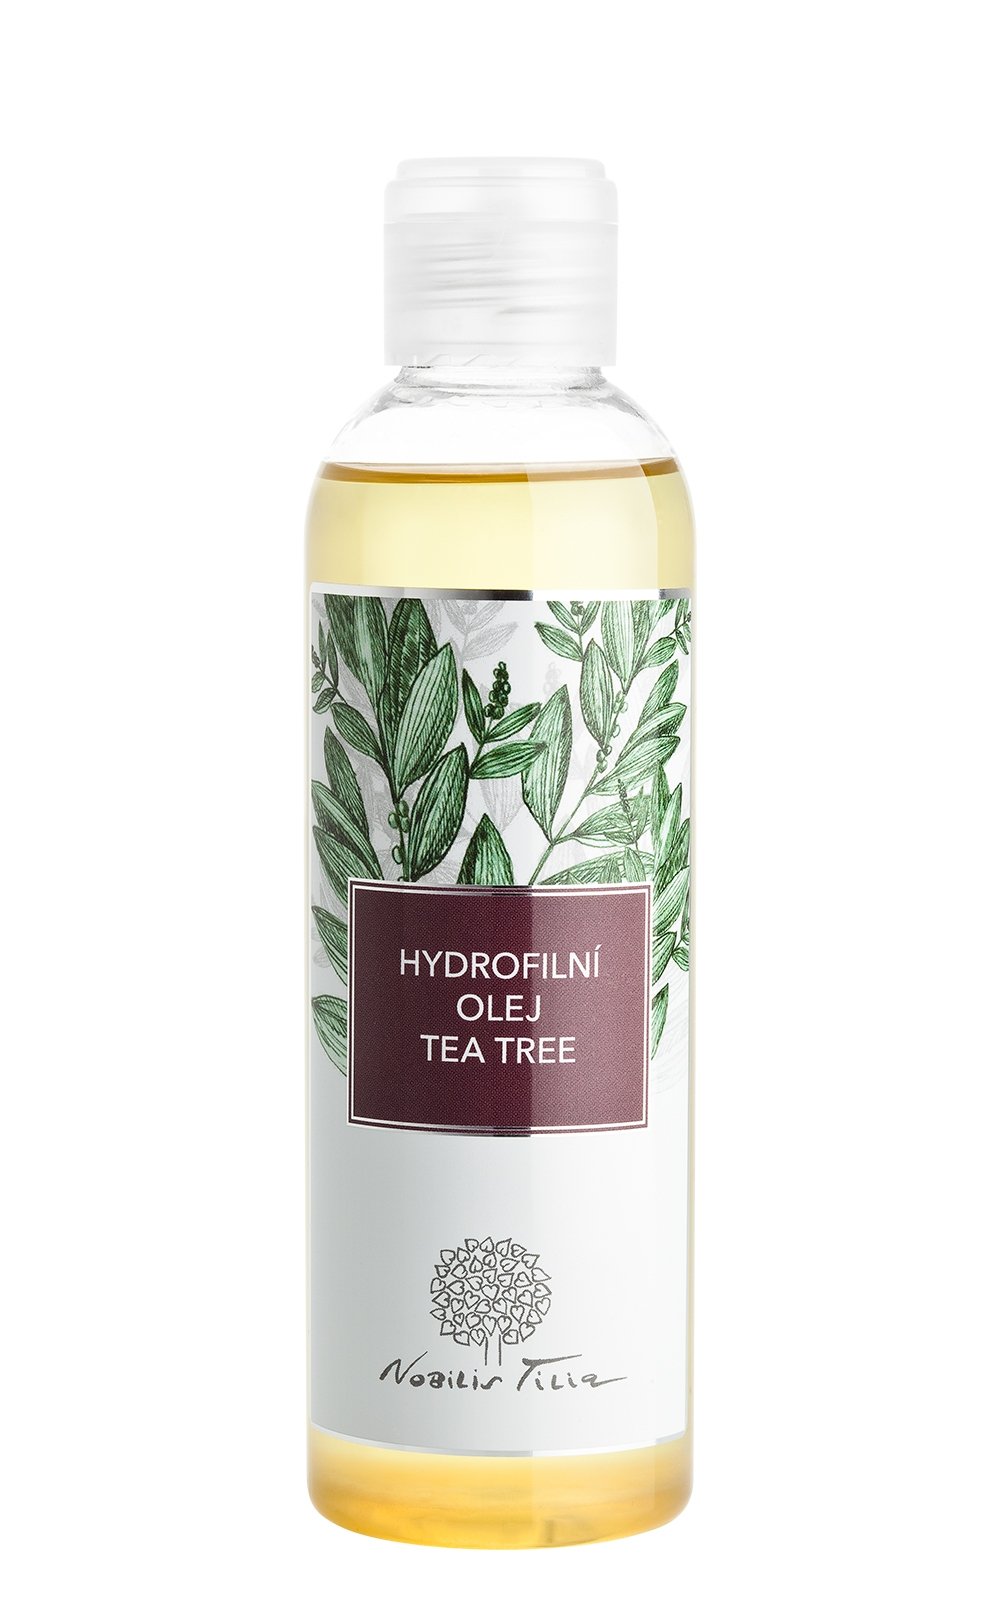 Hydrofilní olej s Tea tree